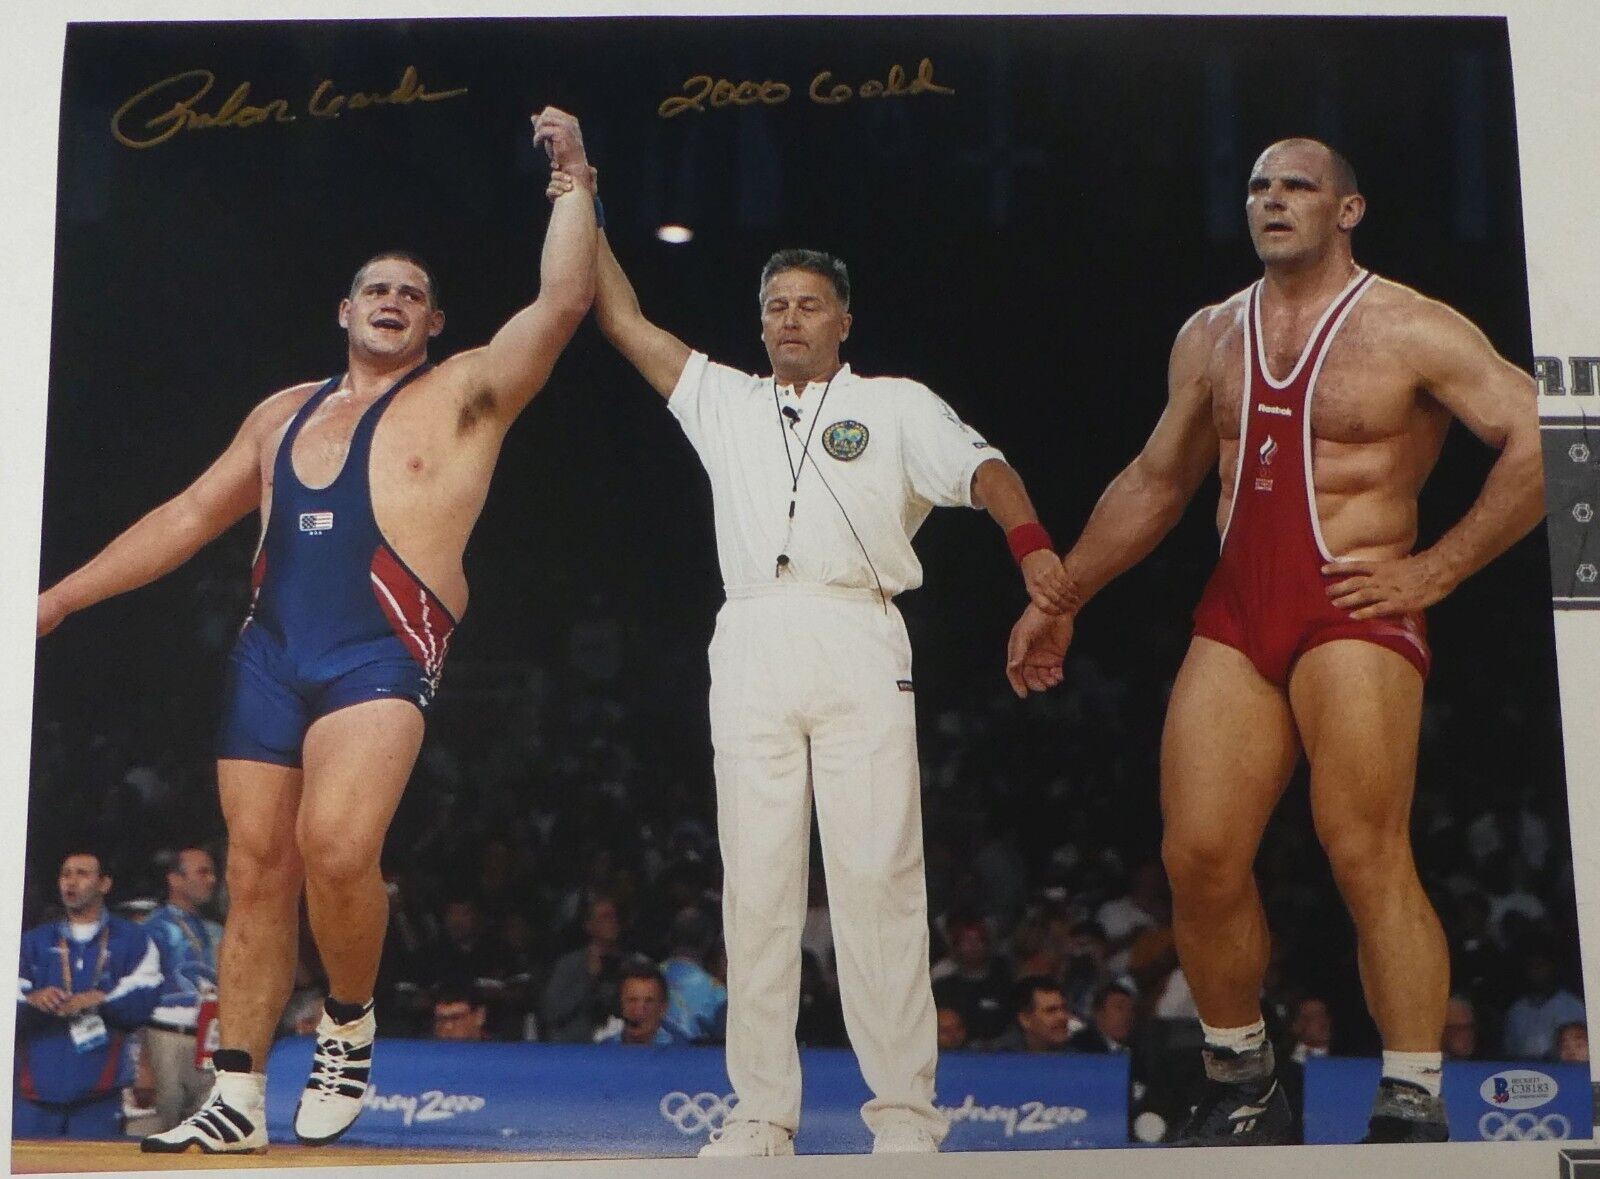 Rulon Gardner Signed 16x20 Photo Poster painting BAS Beckett COA 2000 Olympic USA Wrestling Gold